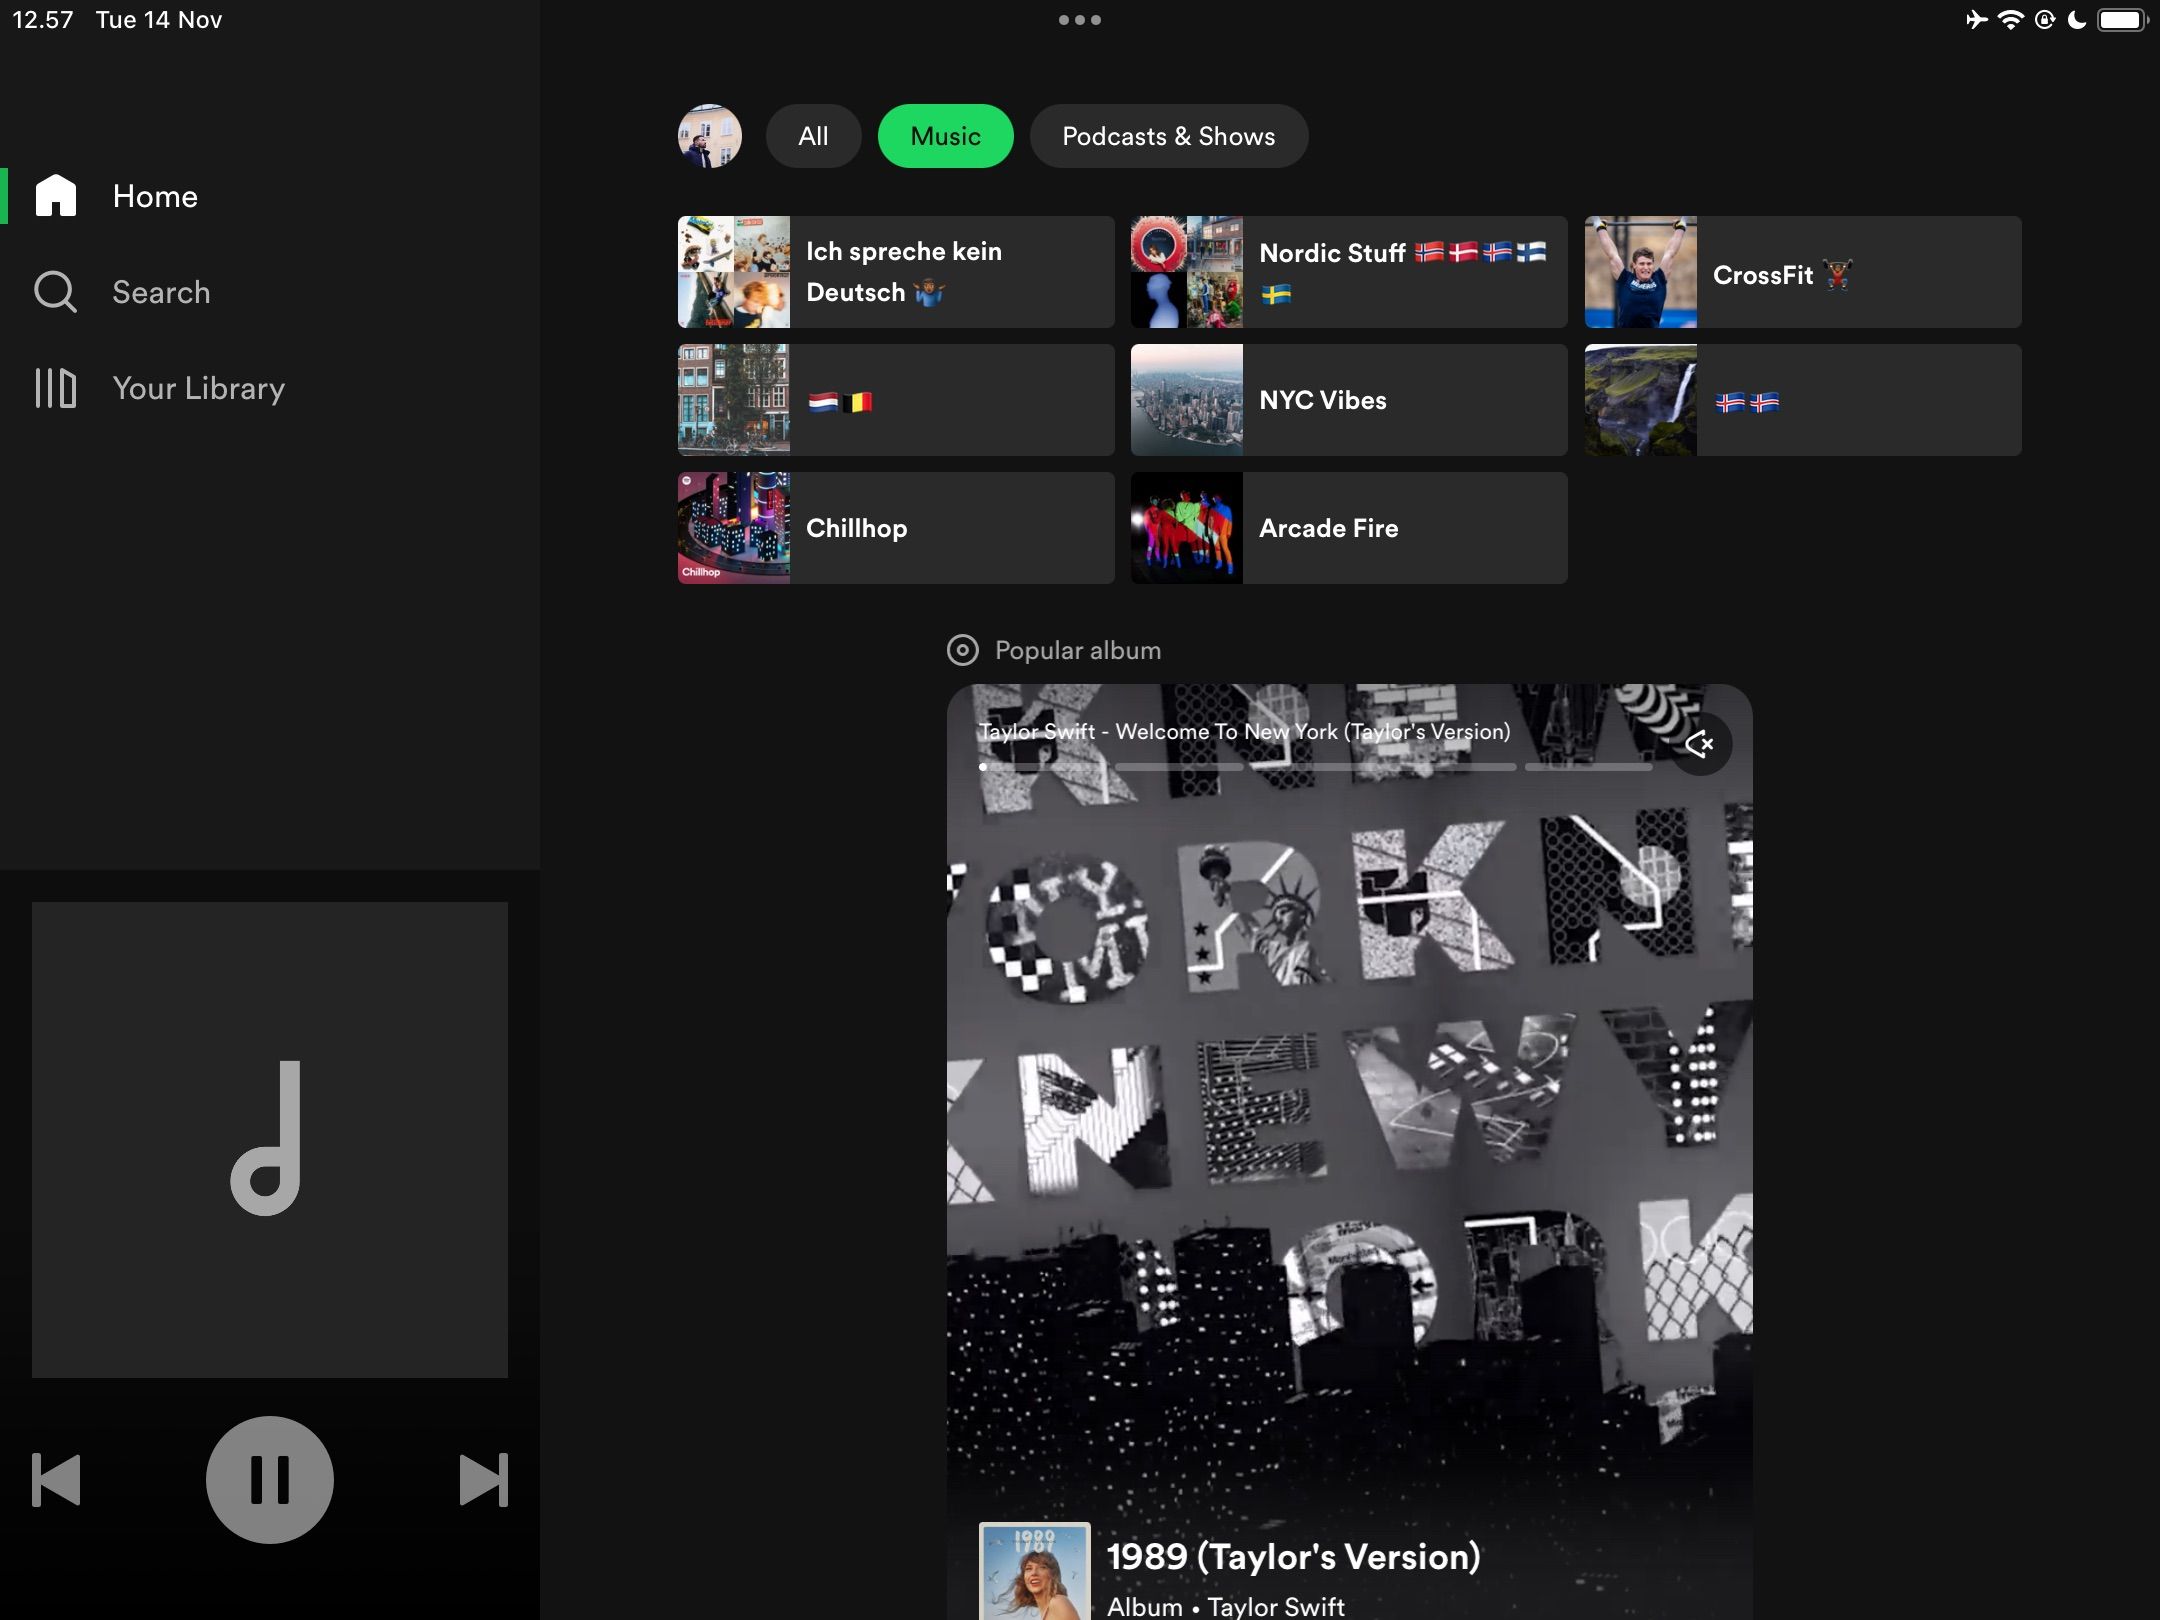 The Spotify App Interface